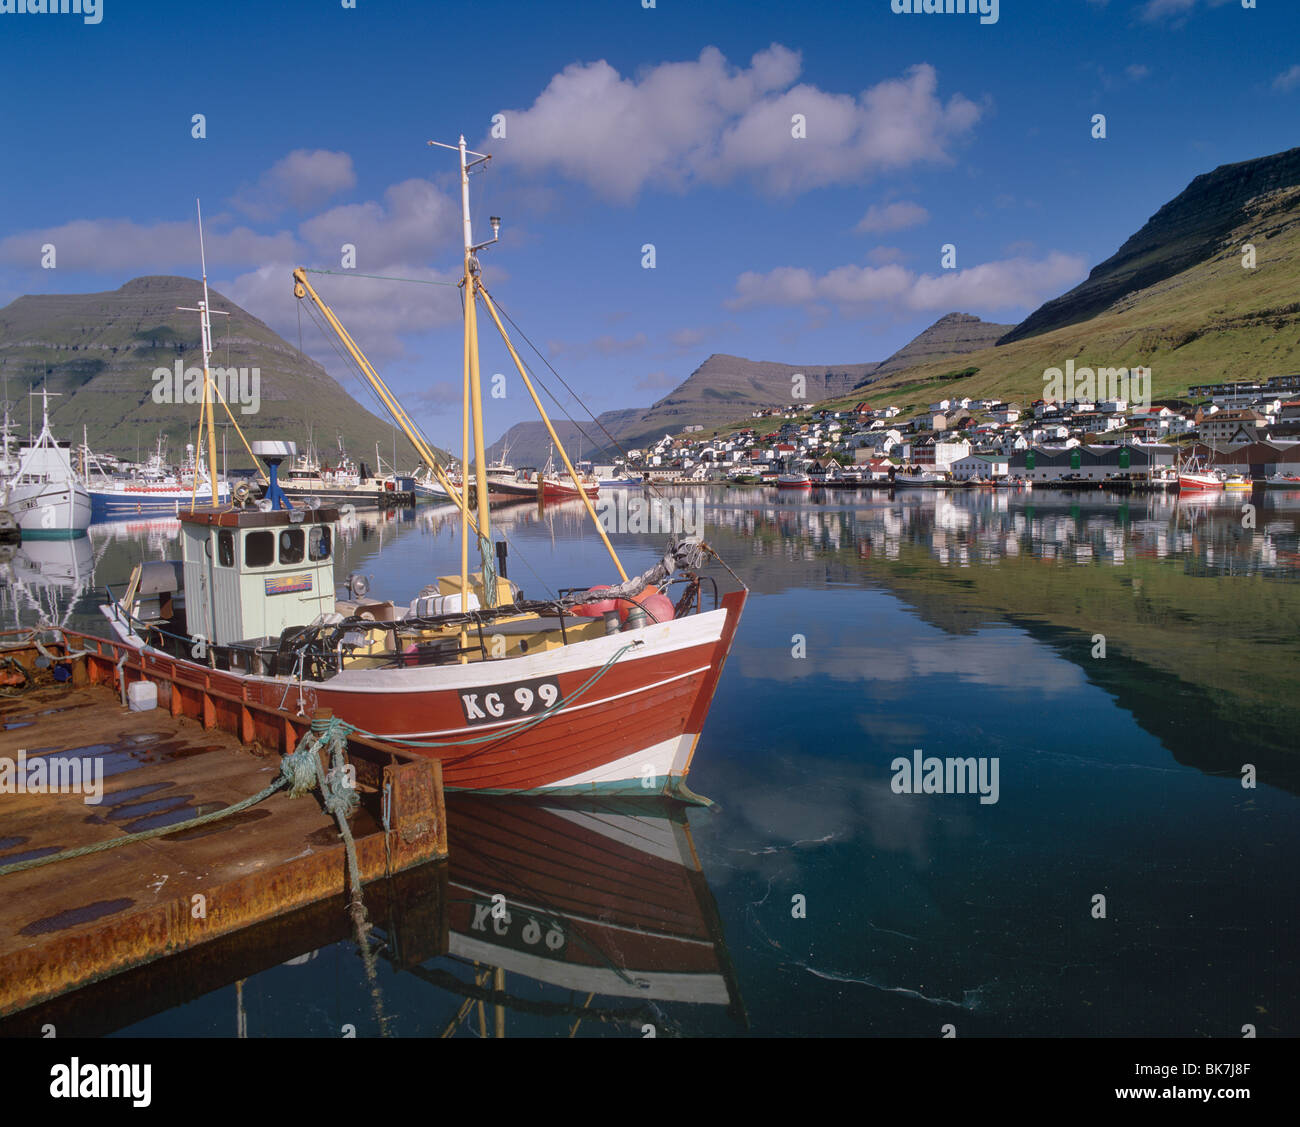 Fishing boats in Klaksvik harbour, Bordoy island (Nordoyar), Faroe Islands (Faroes), Denmark, Europe Stock Photo